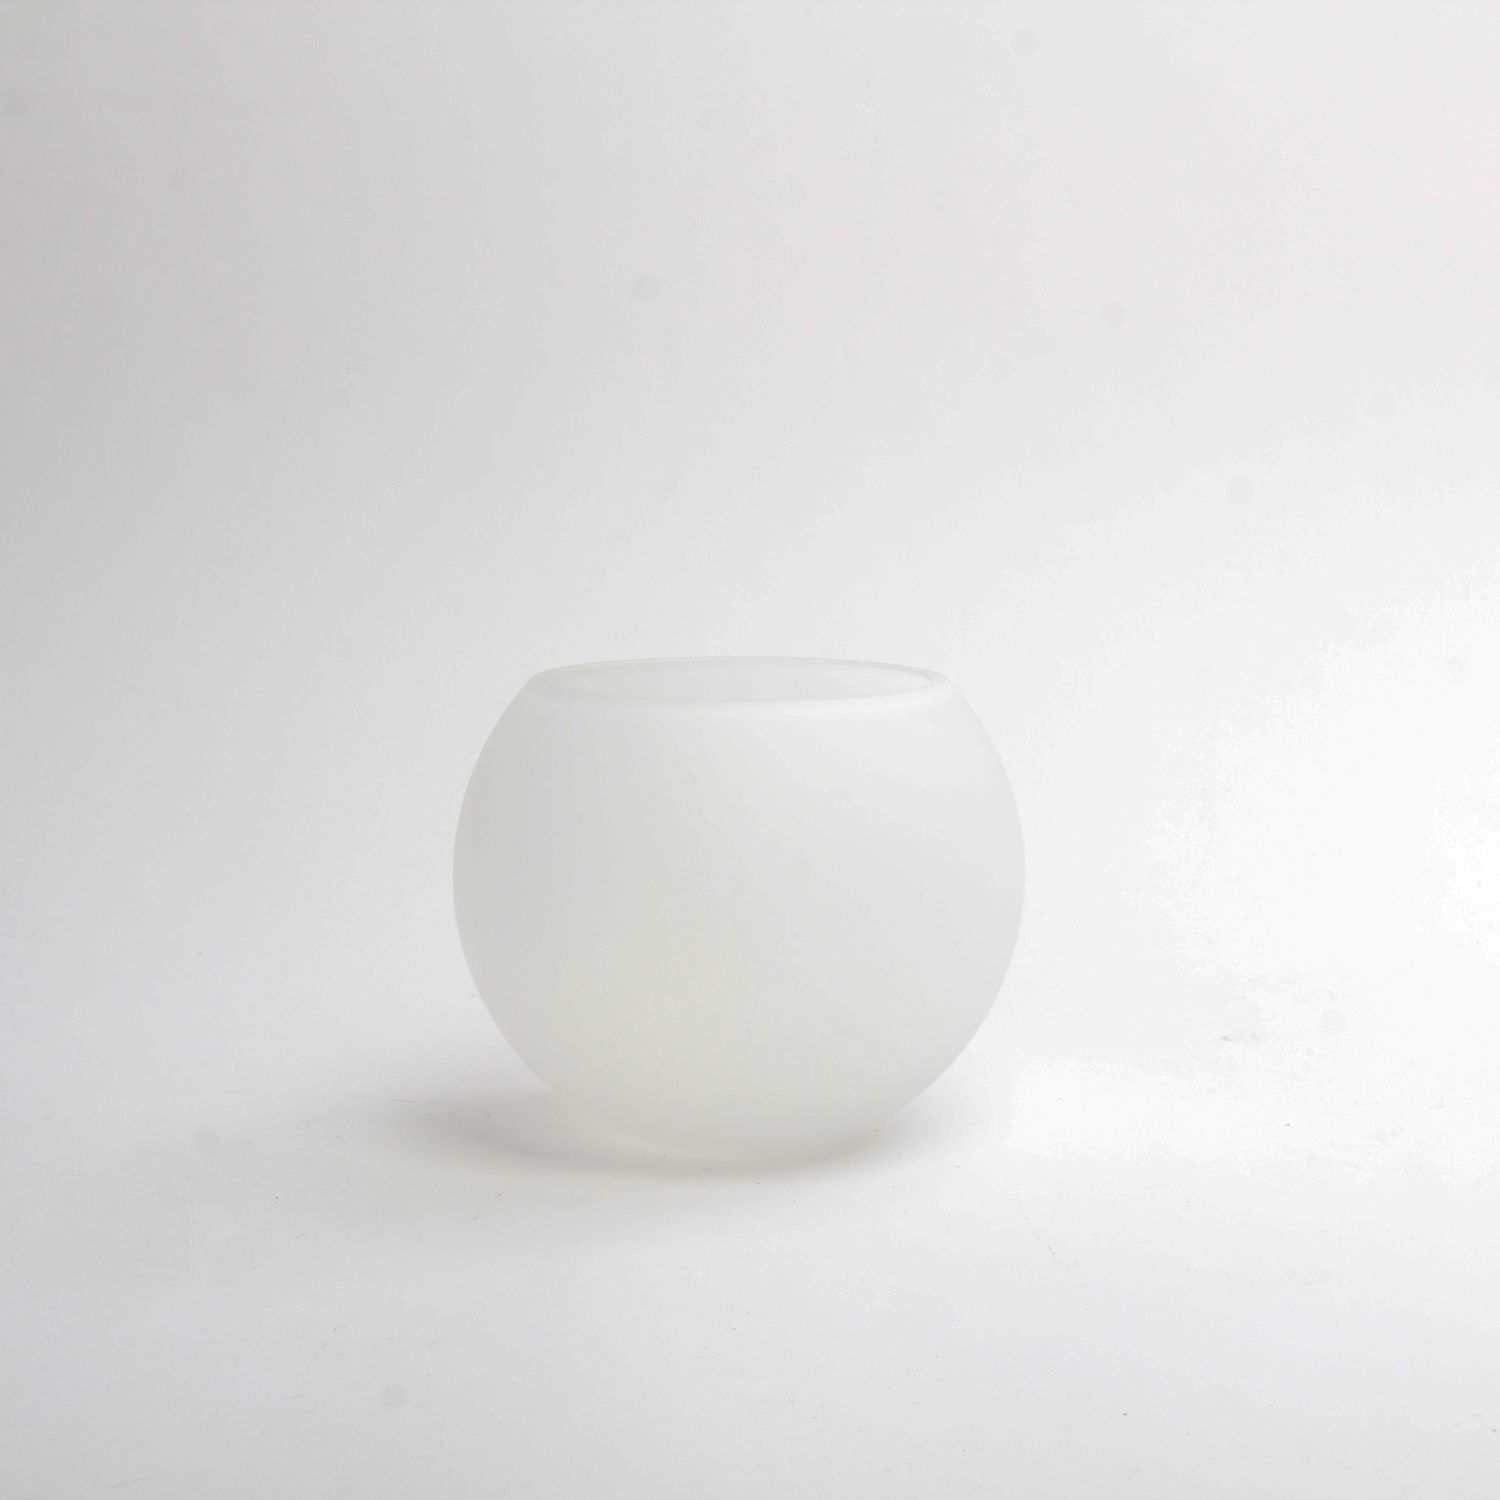 Soffi Studio: Medium White Vase Product Image 1 of 3